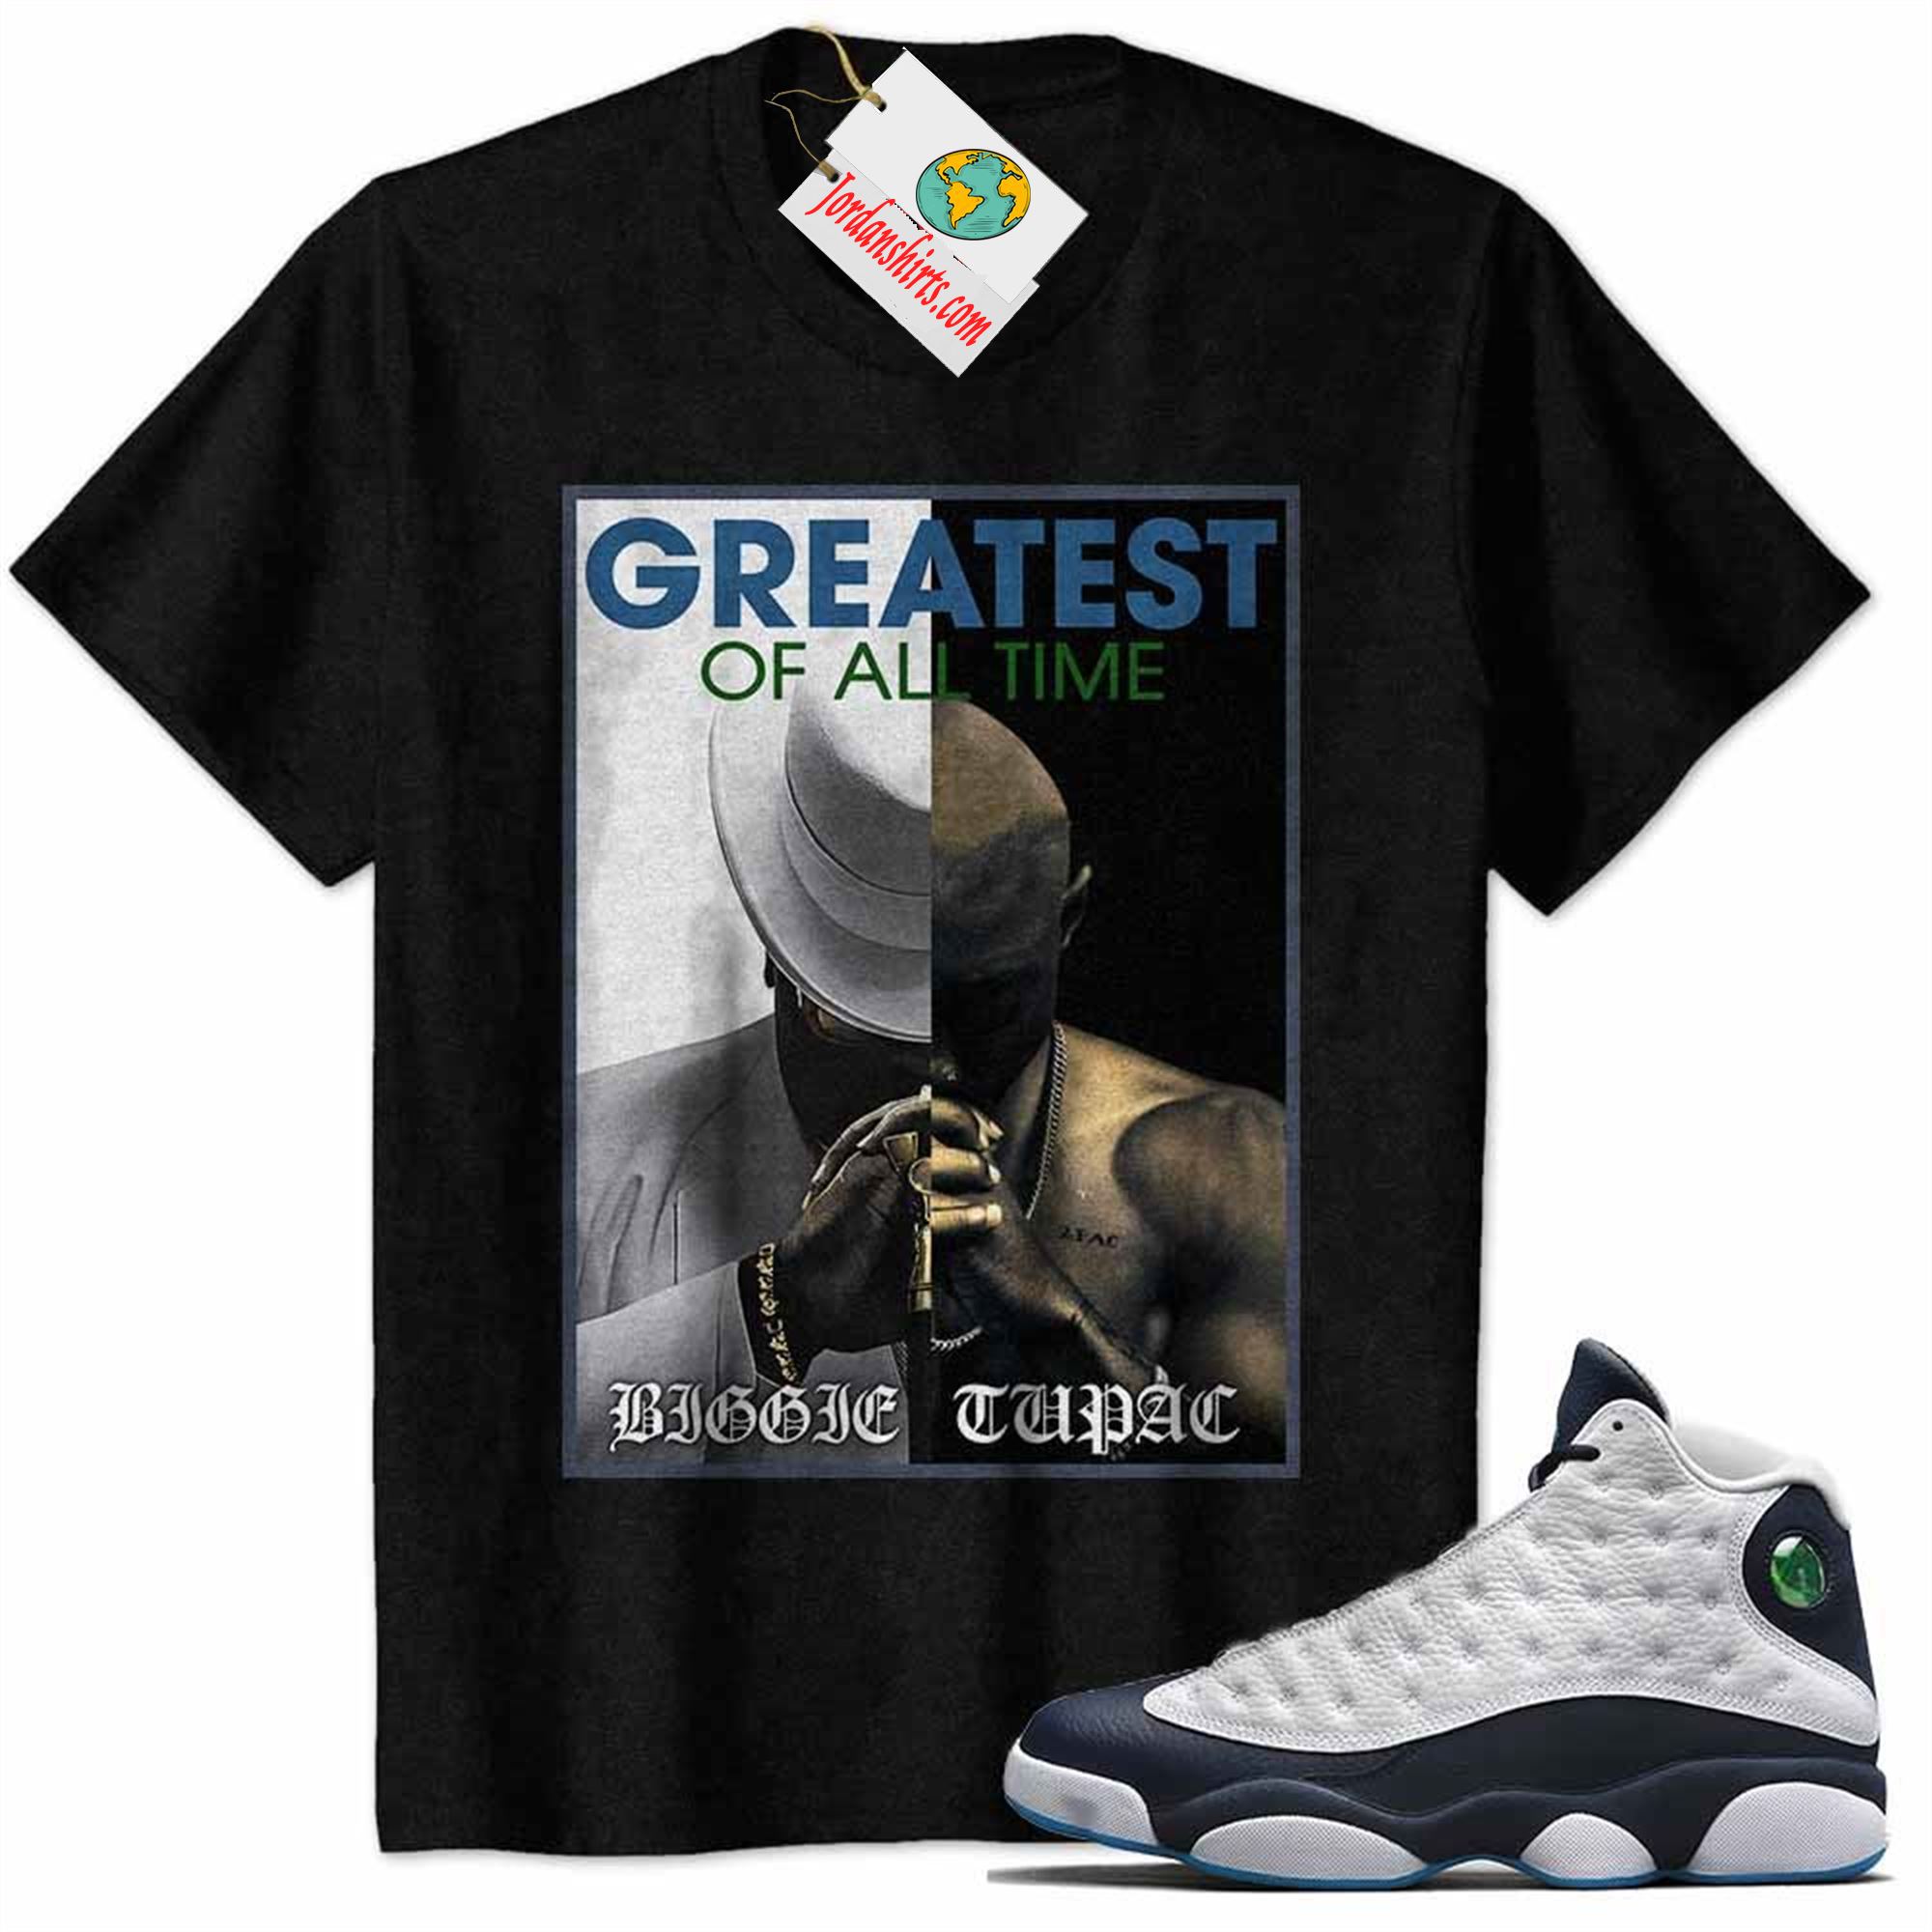 Jordan 13 Shirt, Tupac Shakur Notorious Big Biggie 2pac Greatest Of All Time Black Air Jordan 13 Obsidian 13s Full Size Up To 5xl